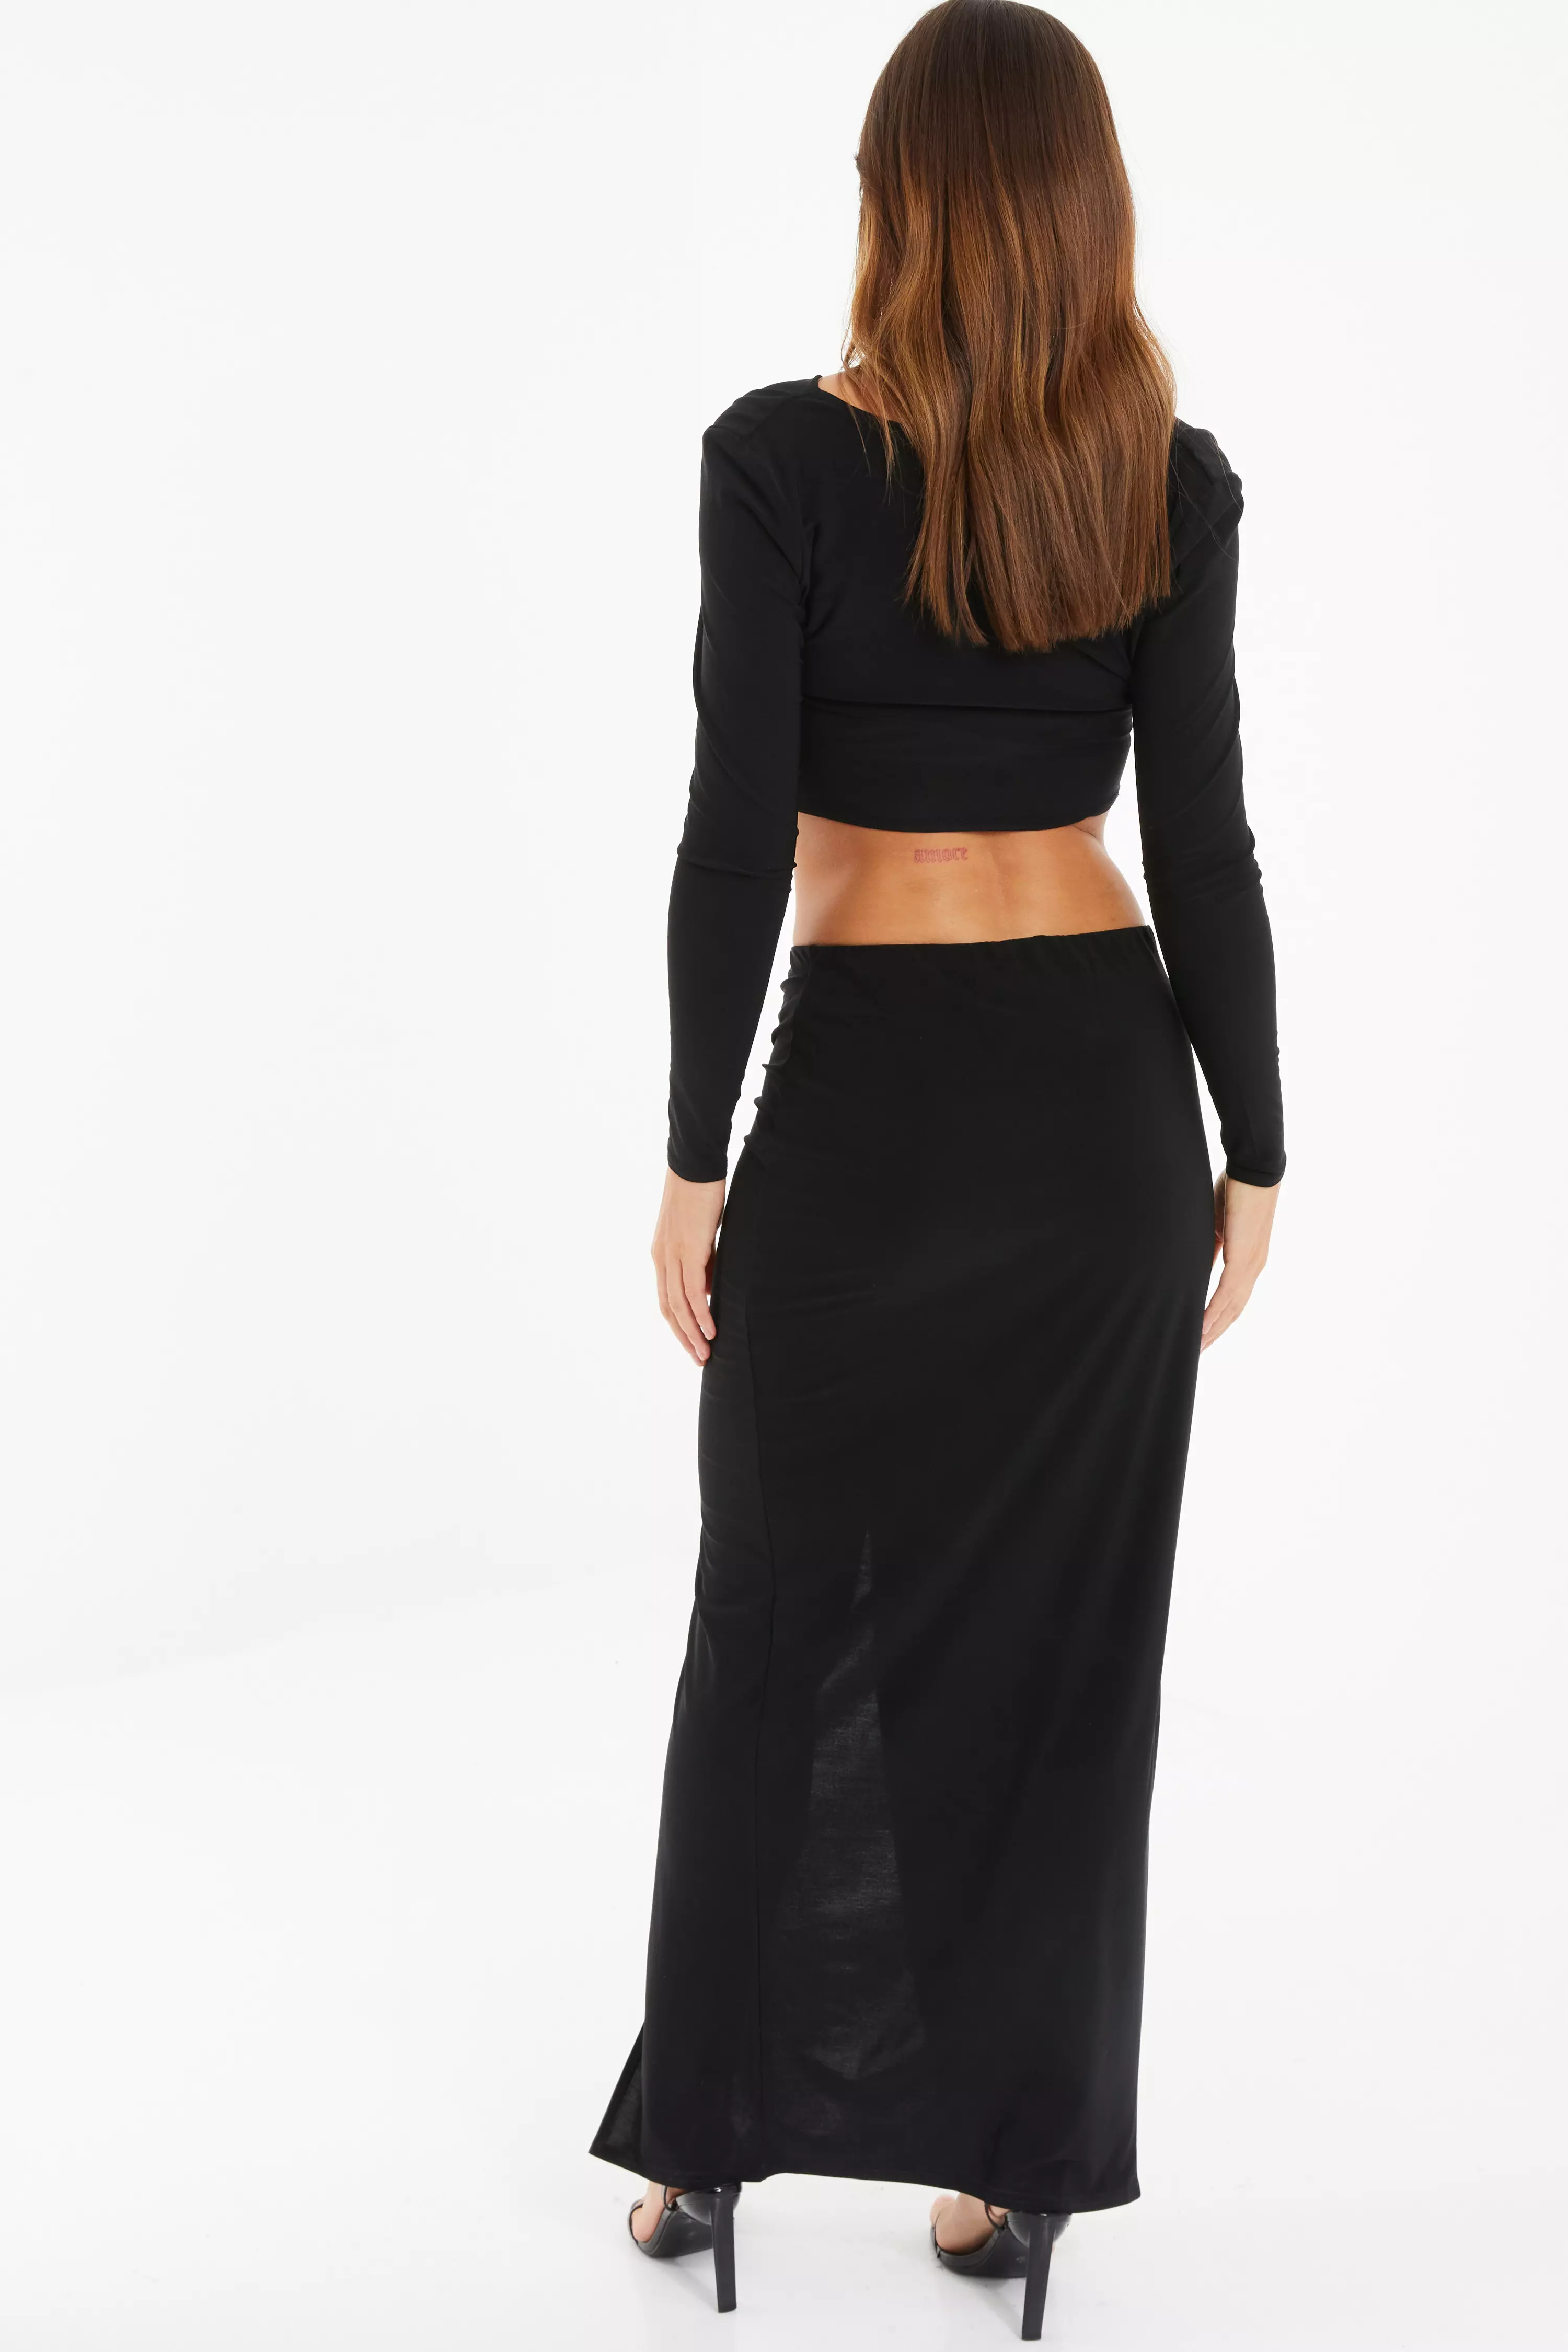 Black Ruched Split Maxi Skirt - QUIZ Clothing